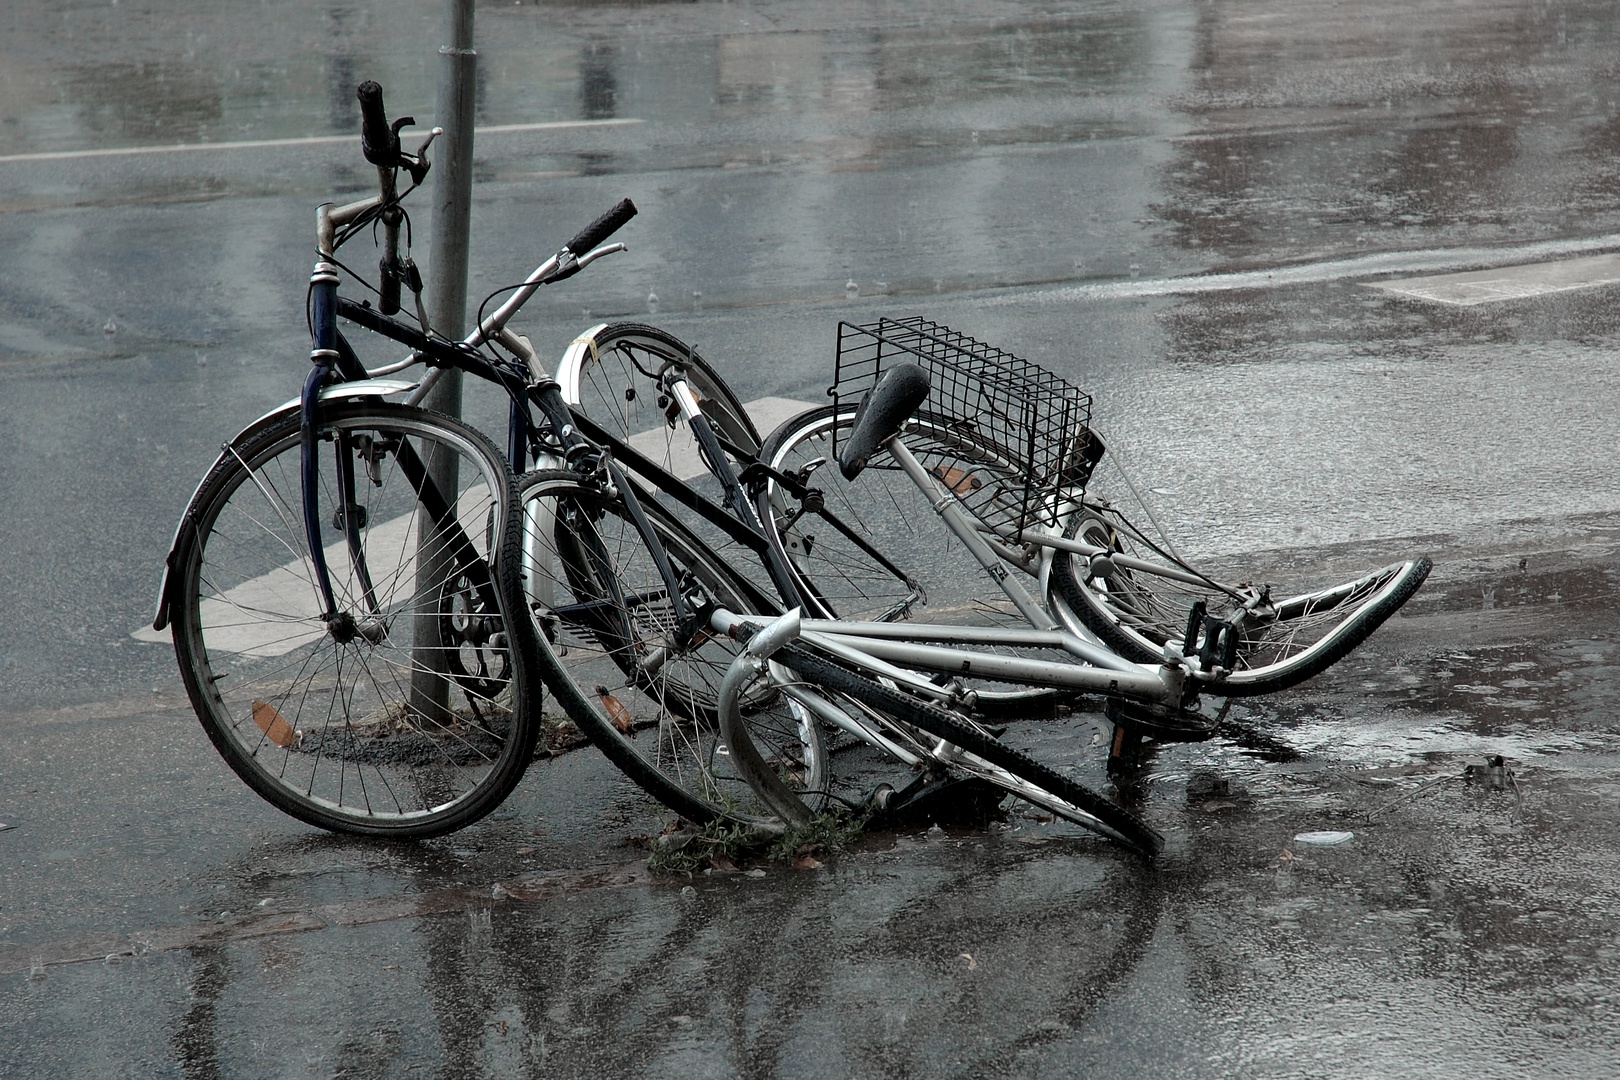 Bikes in The Rain